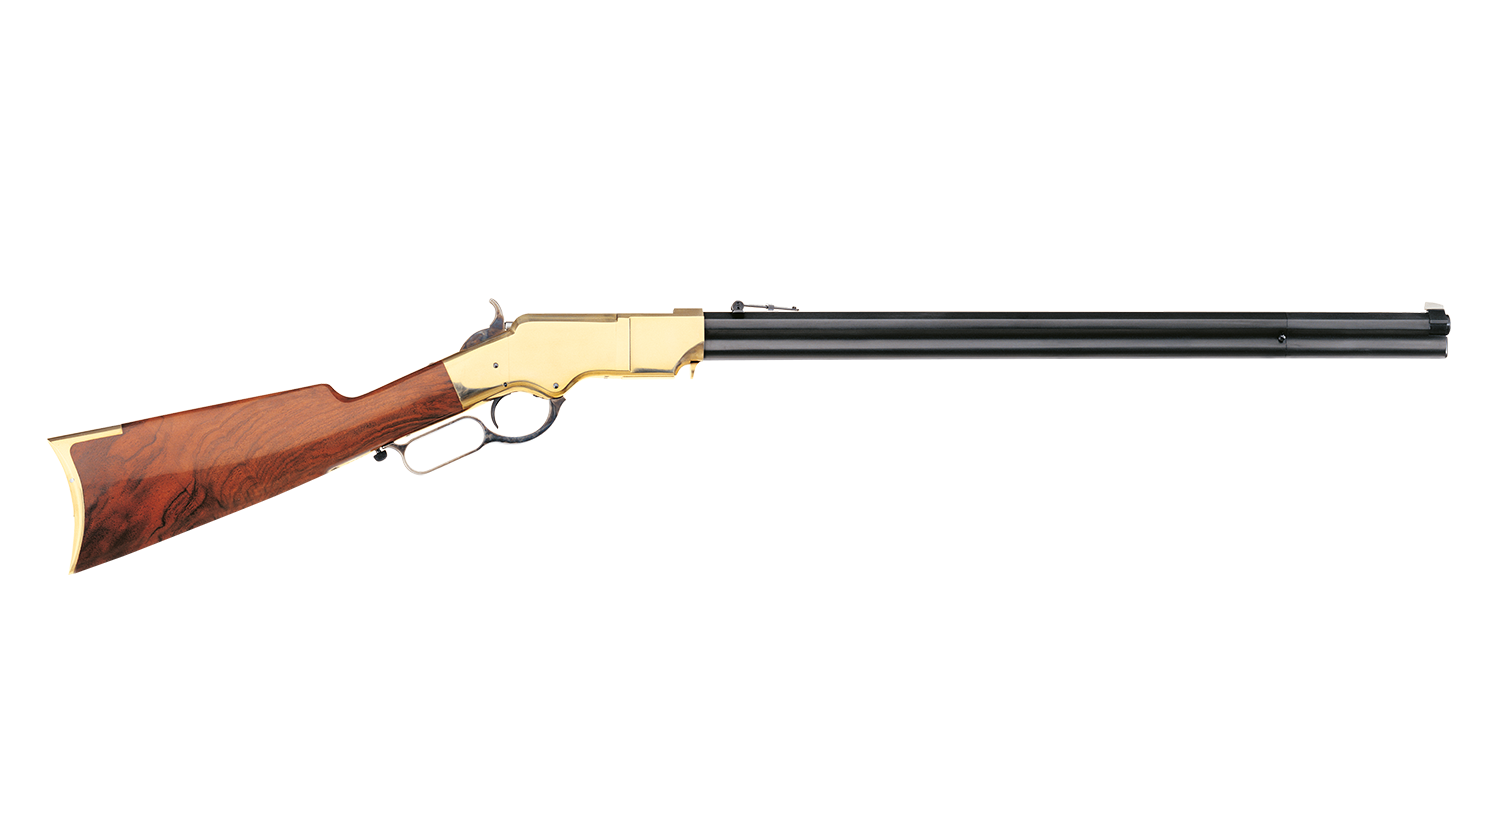 45 Long Colt Ориентировочная цена 130'000 руб. 1866 YELLOW BOY RIFLE К...